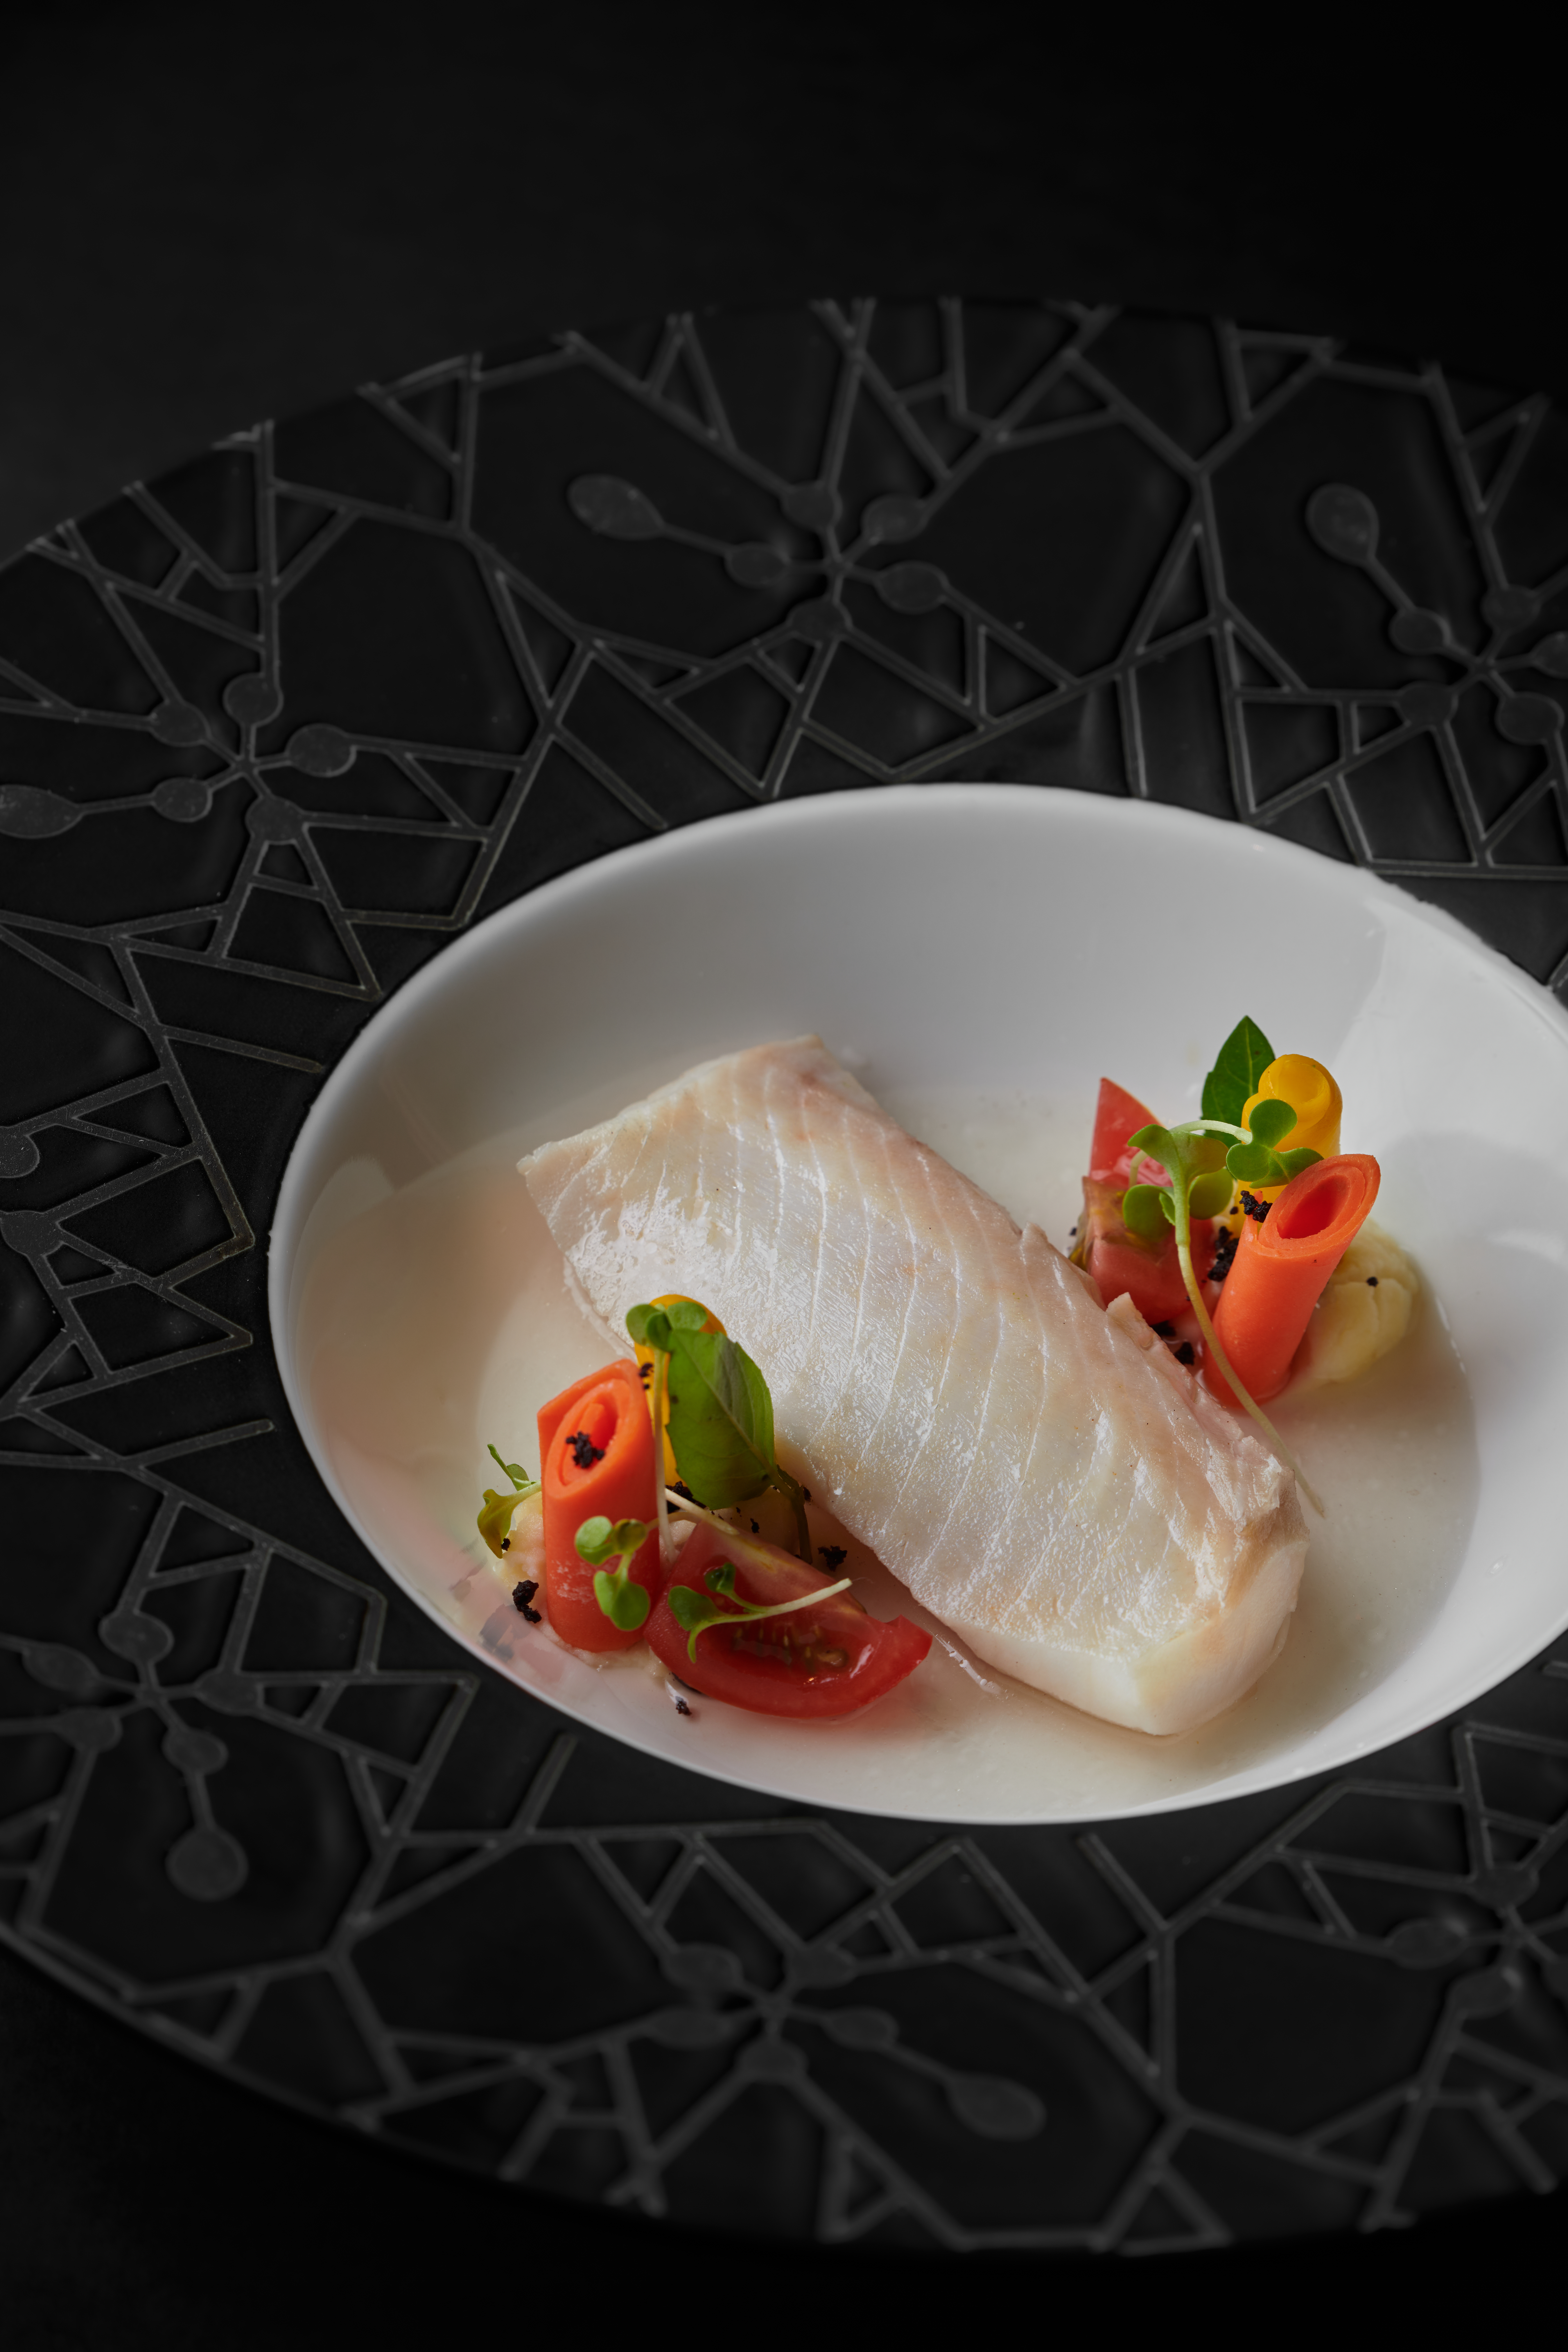 cod fish, “acqua pazza” style意式“疯狂水煮”黑鳕鱼